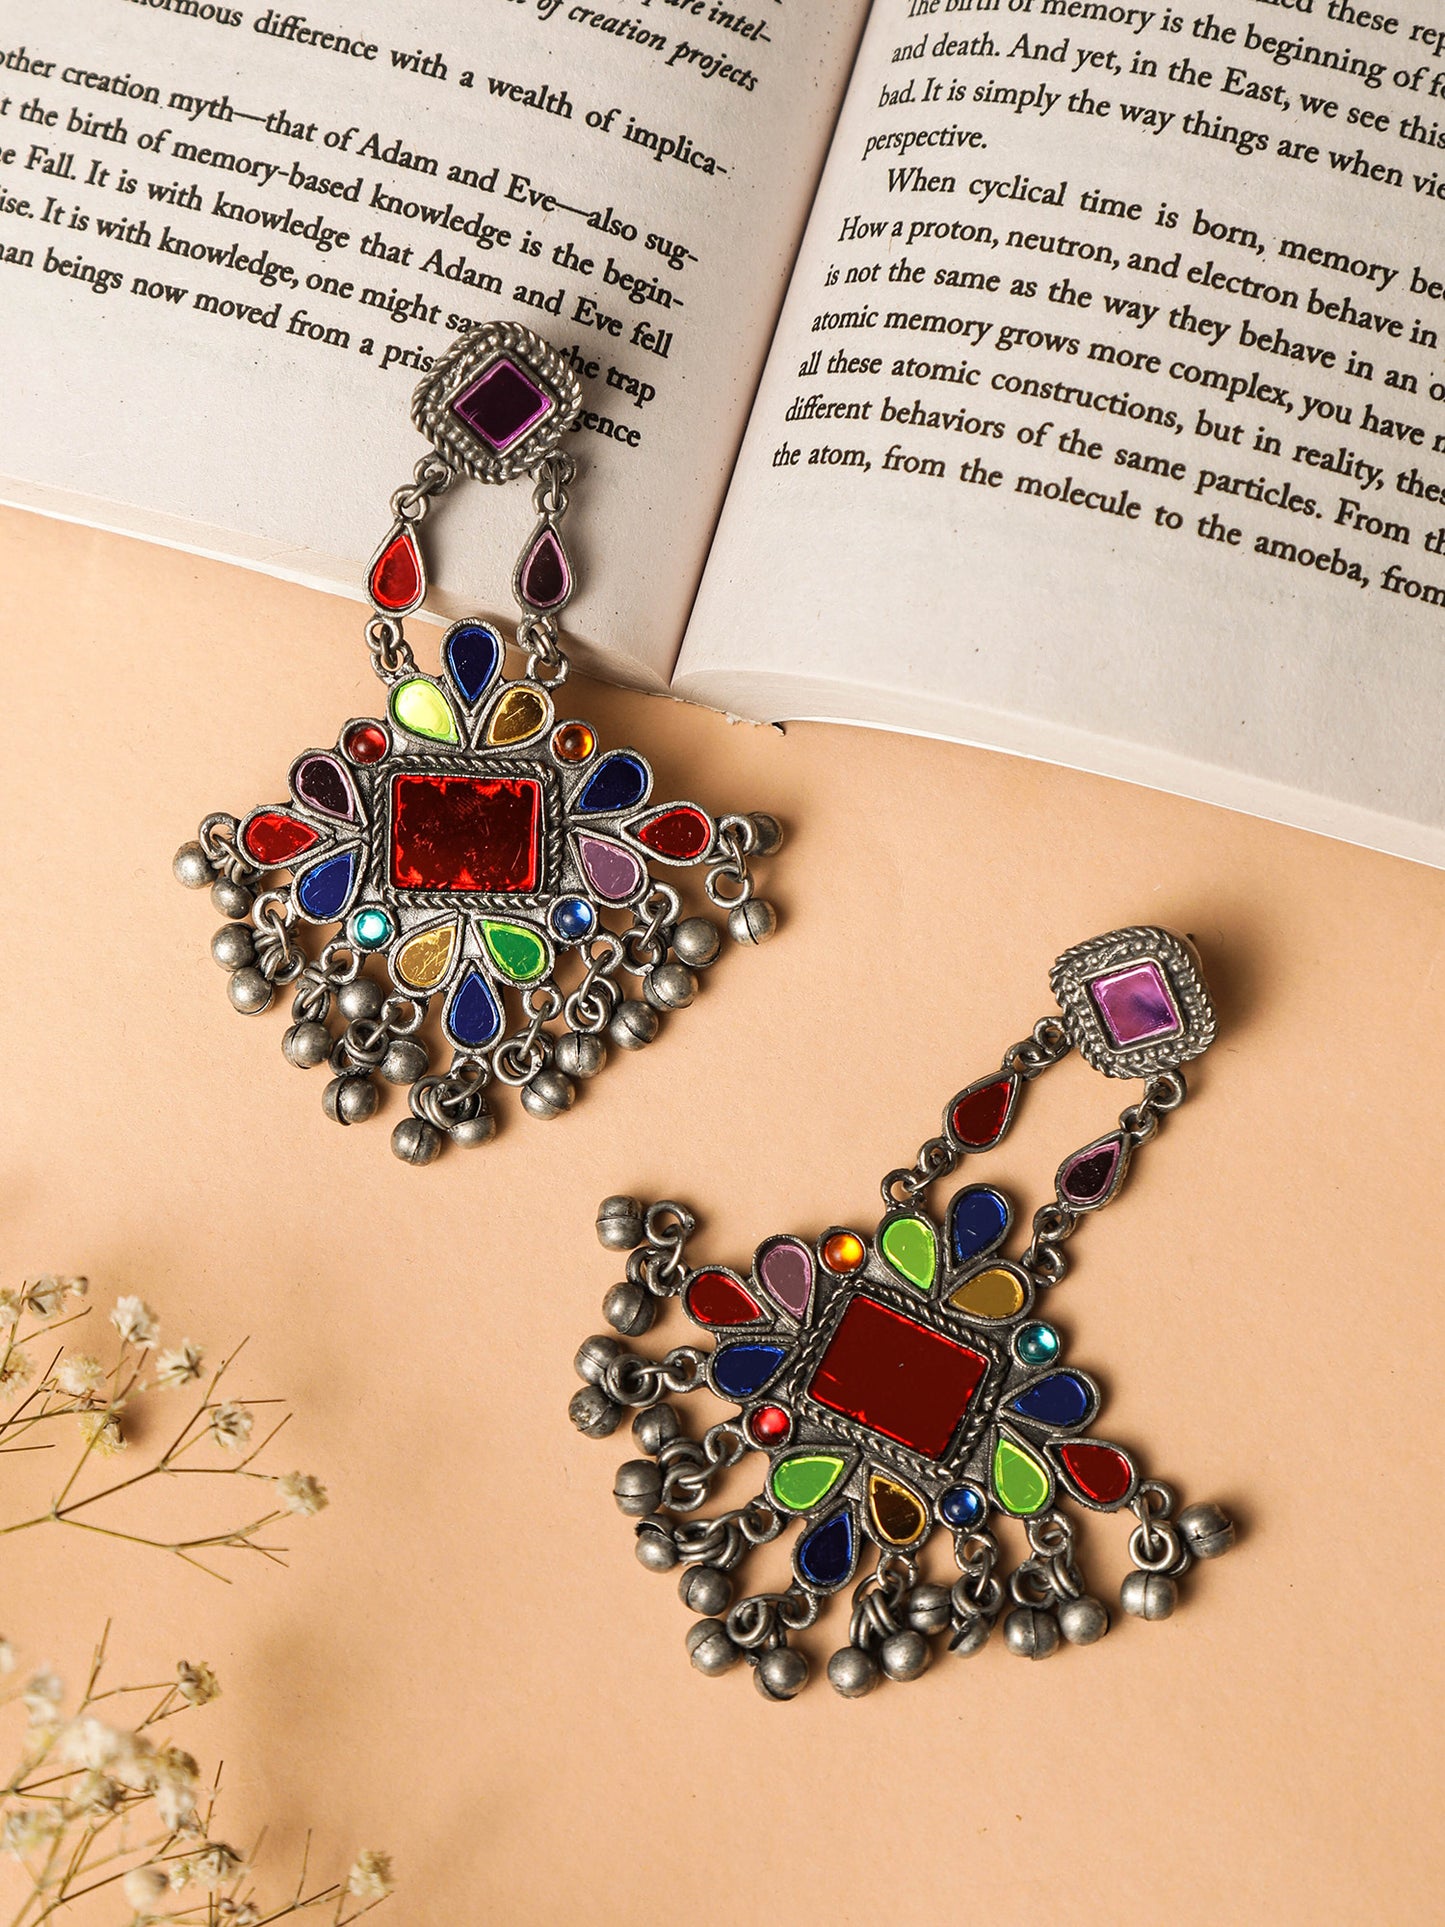 The Multicoloured Whimsy Glass Earrings